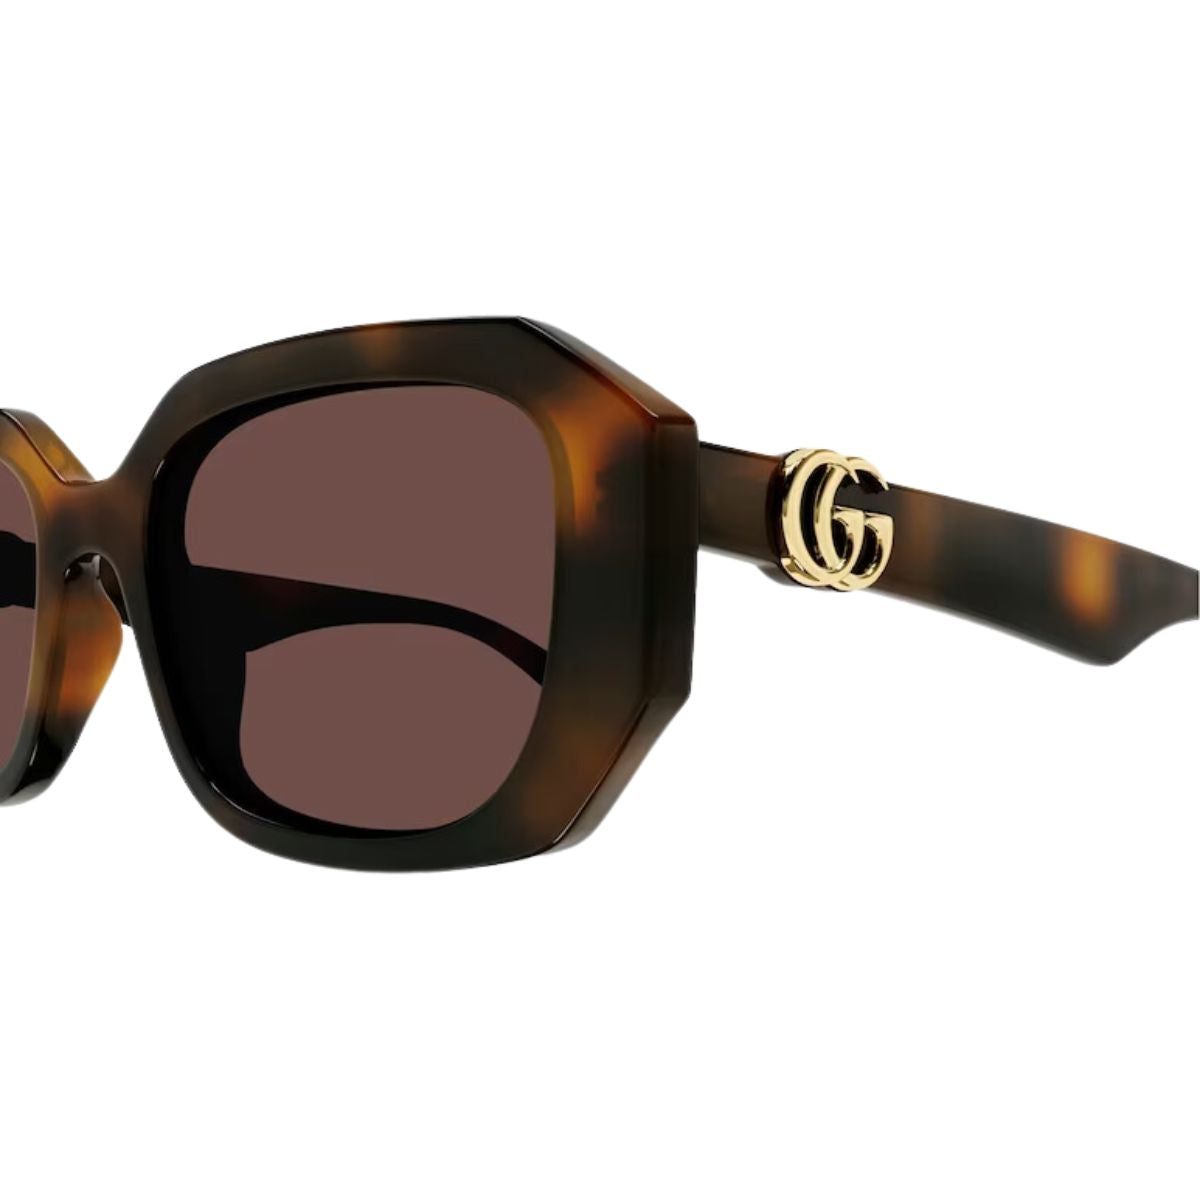 Gucci Women's Sunglasses Model 1535S 002 - Shop the Best Selection at Optorium"